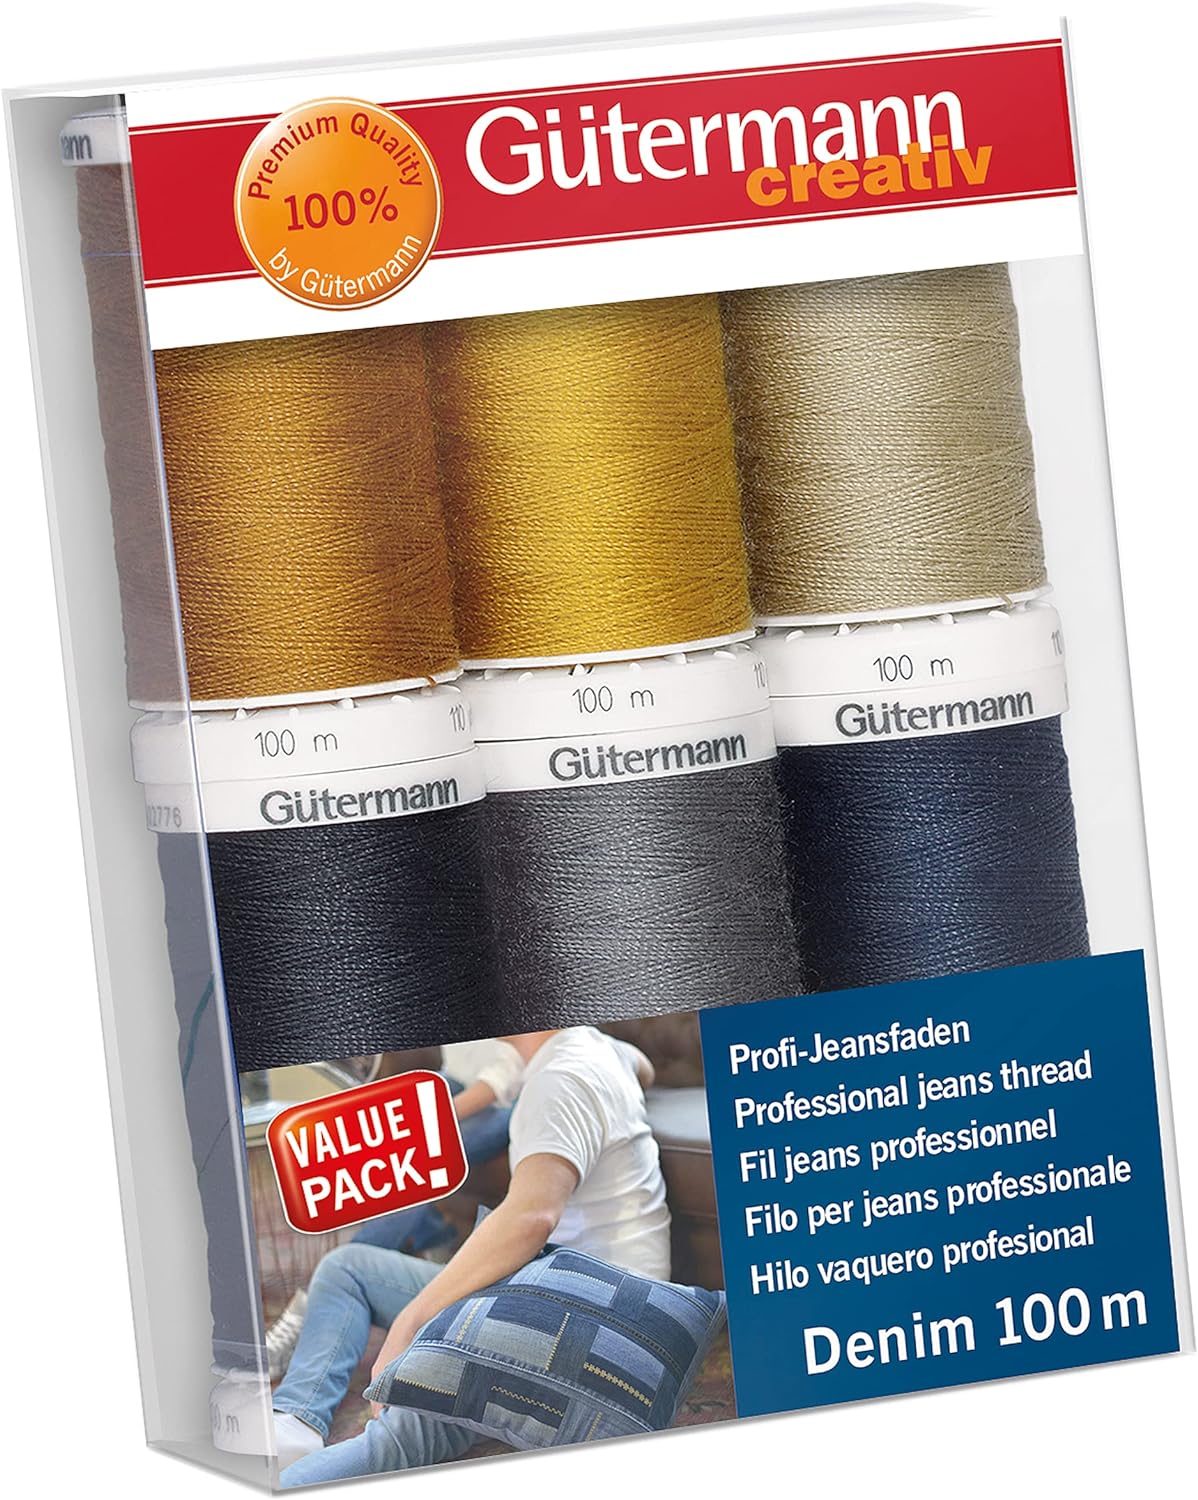 Gutermann - Denim Set - Professional Jeans Thread